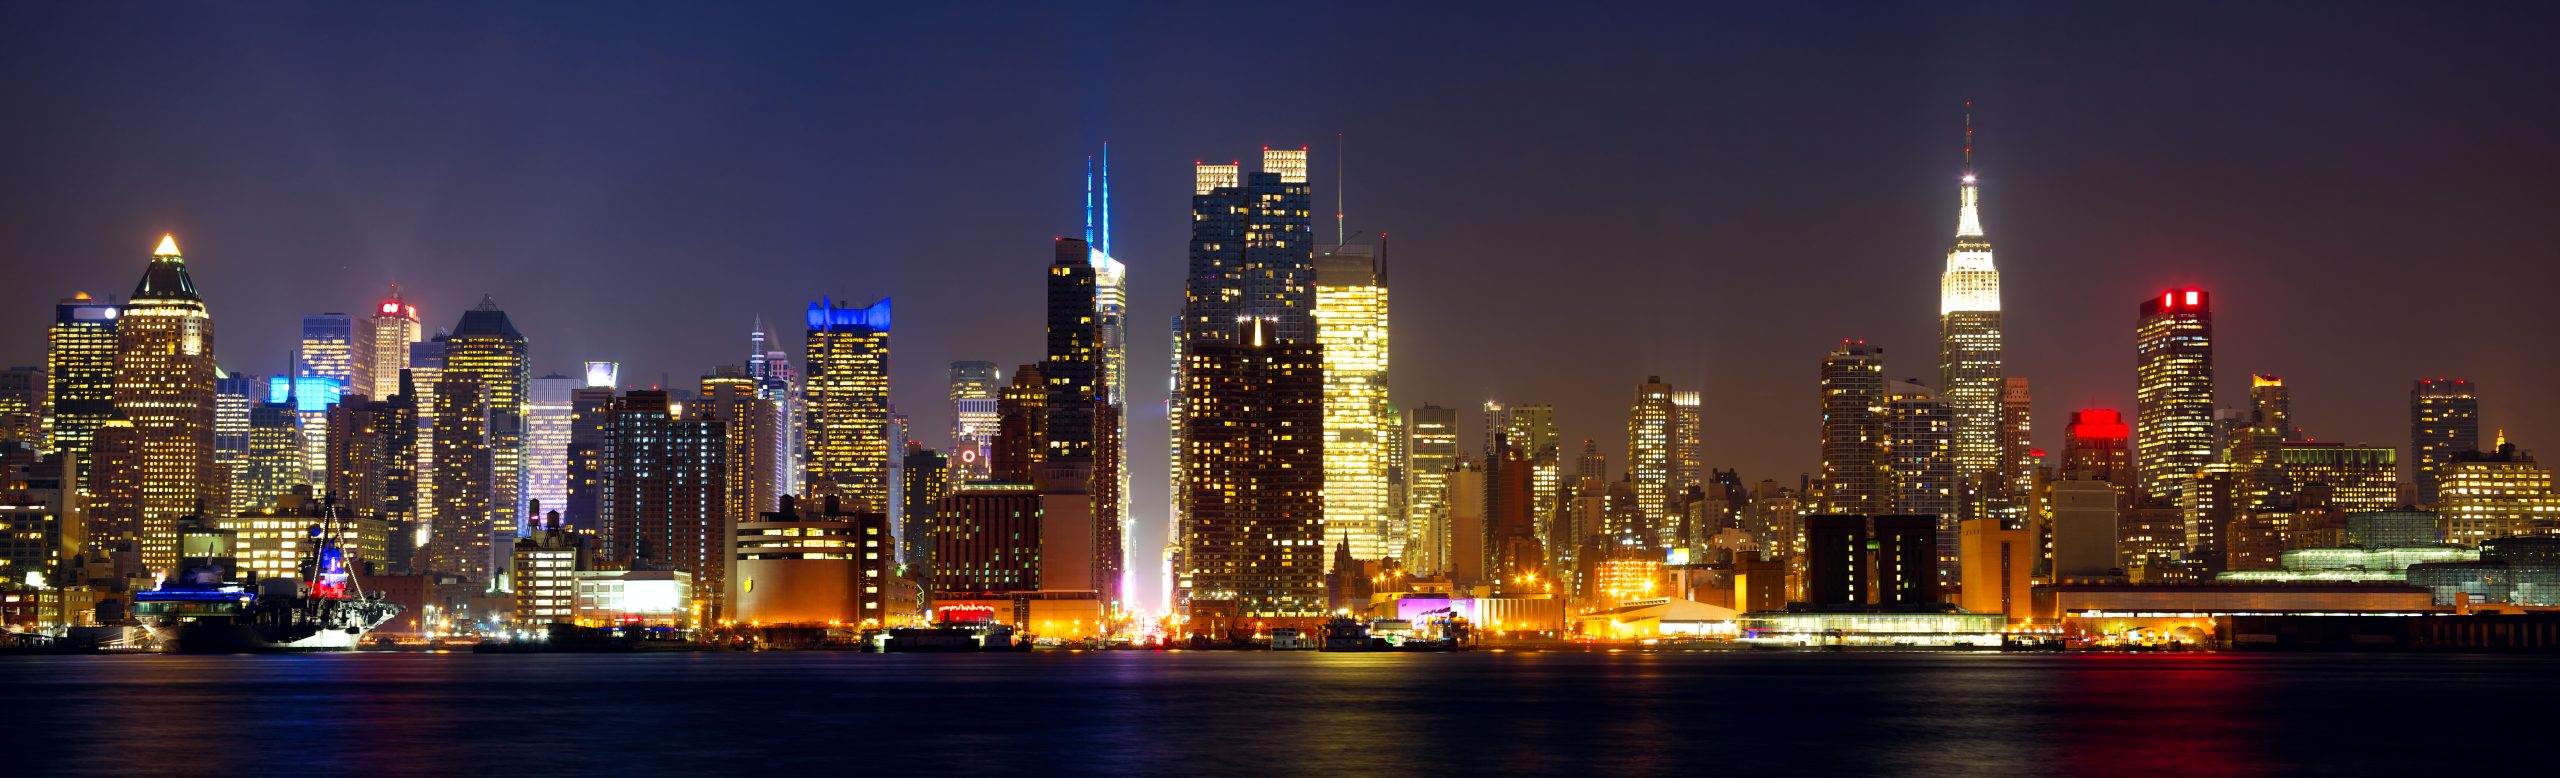 Manhattan skyline panorama with Times Square lights at night, New York City